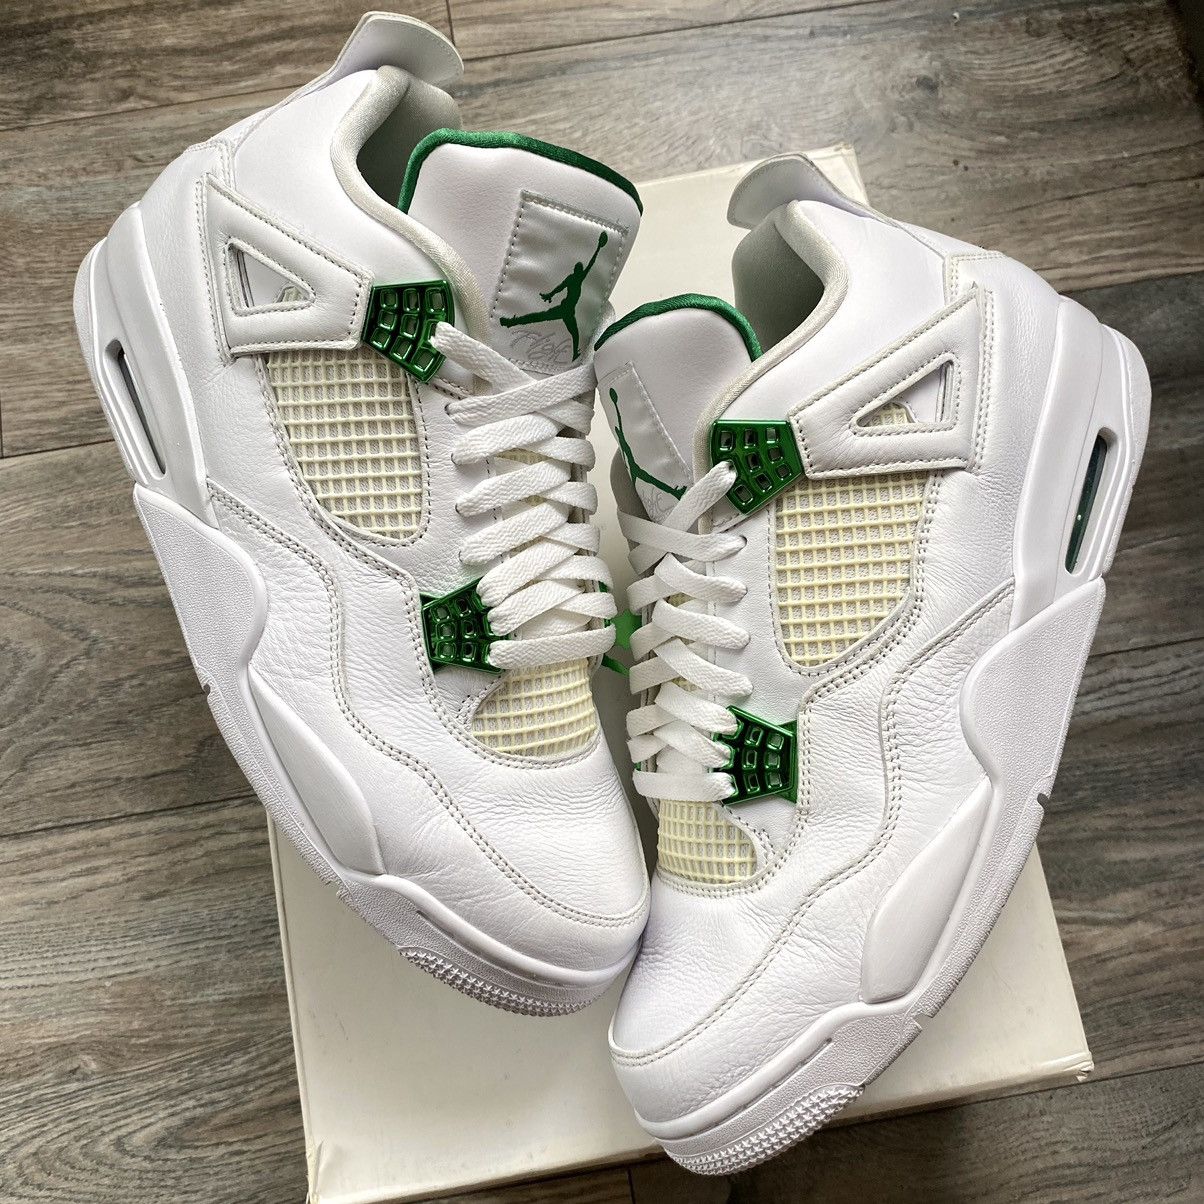 Pre-owned Jordan Nike Jordan 4 Retro “metallic Green” Size 12m Shoes In White